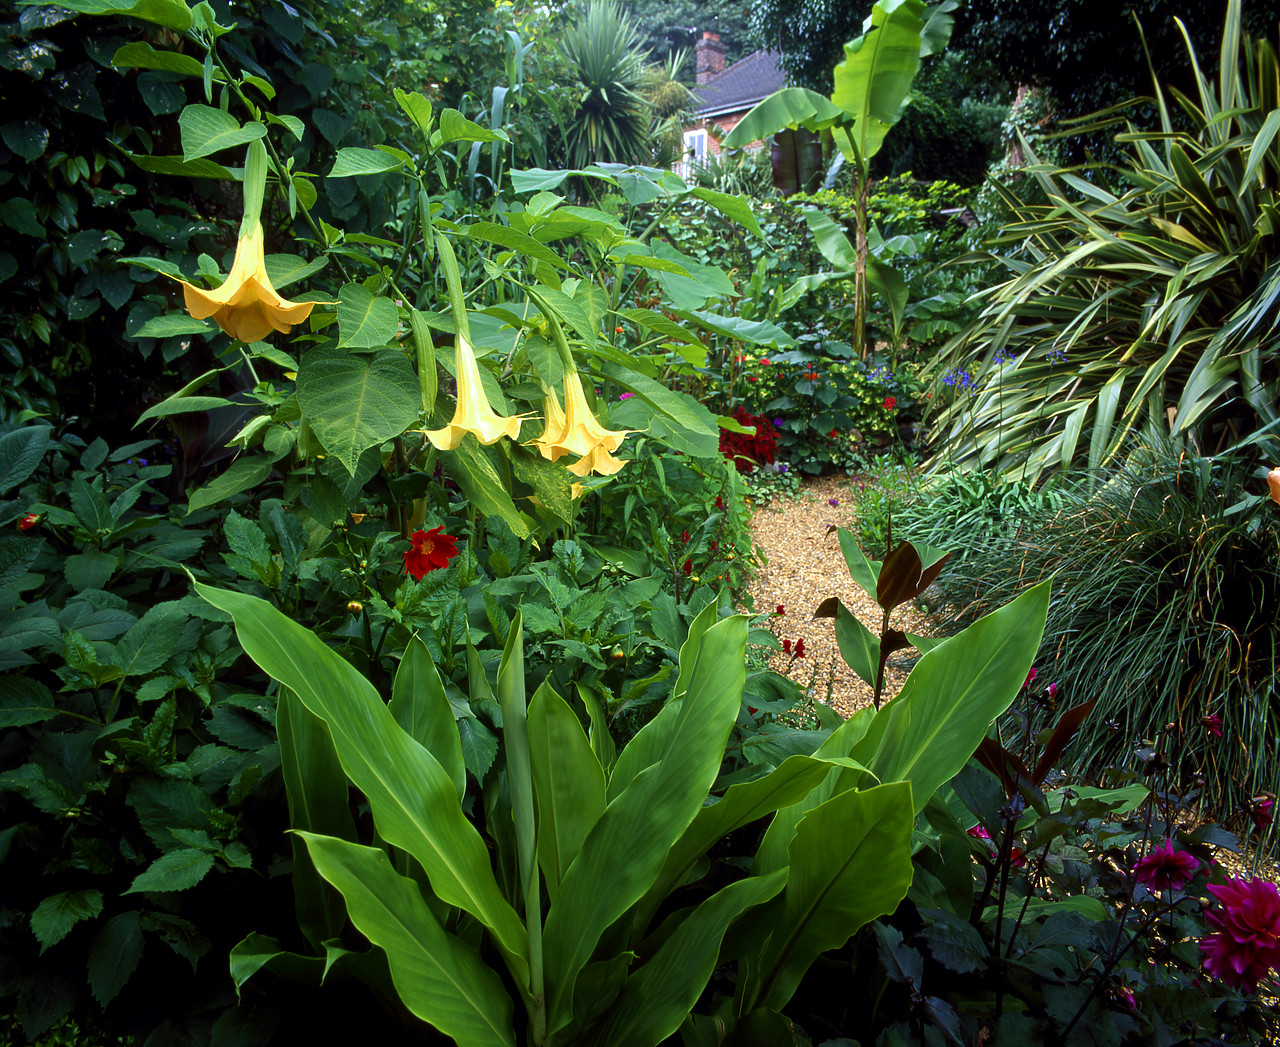 #050289-1 - The Exotic Garden, Norwich, Norfolk, England